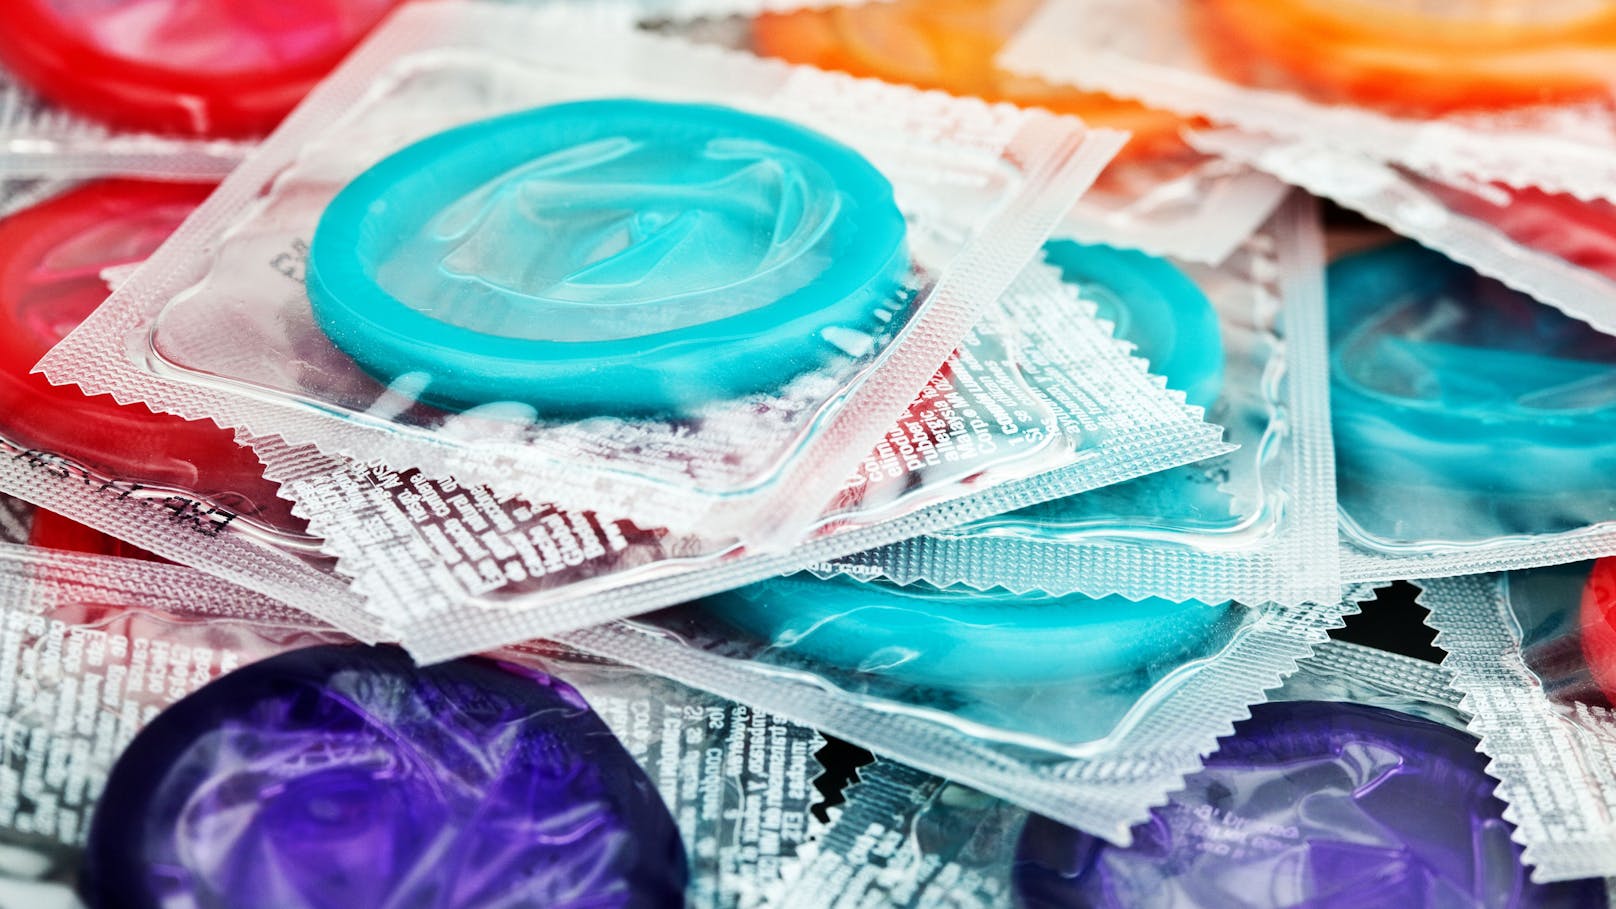 Kroatischer Sexshop sucht jetzt Kondomtester vom Balkan